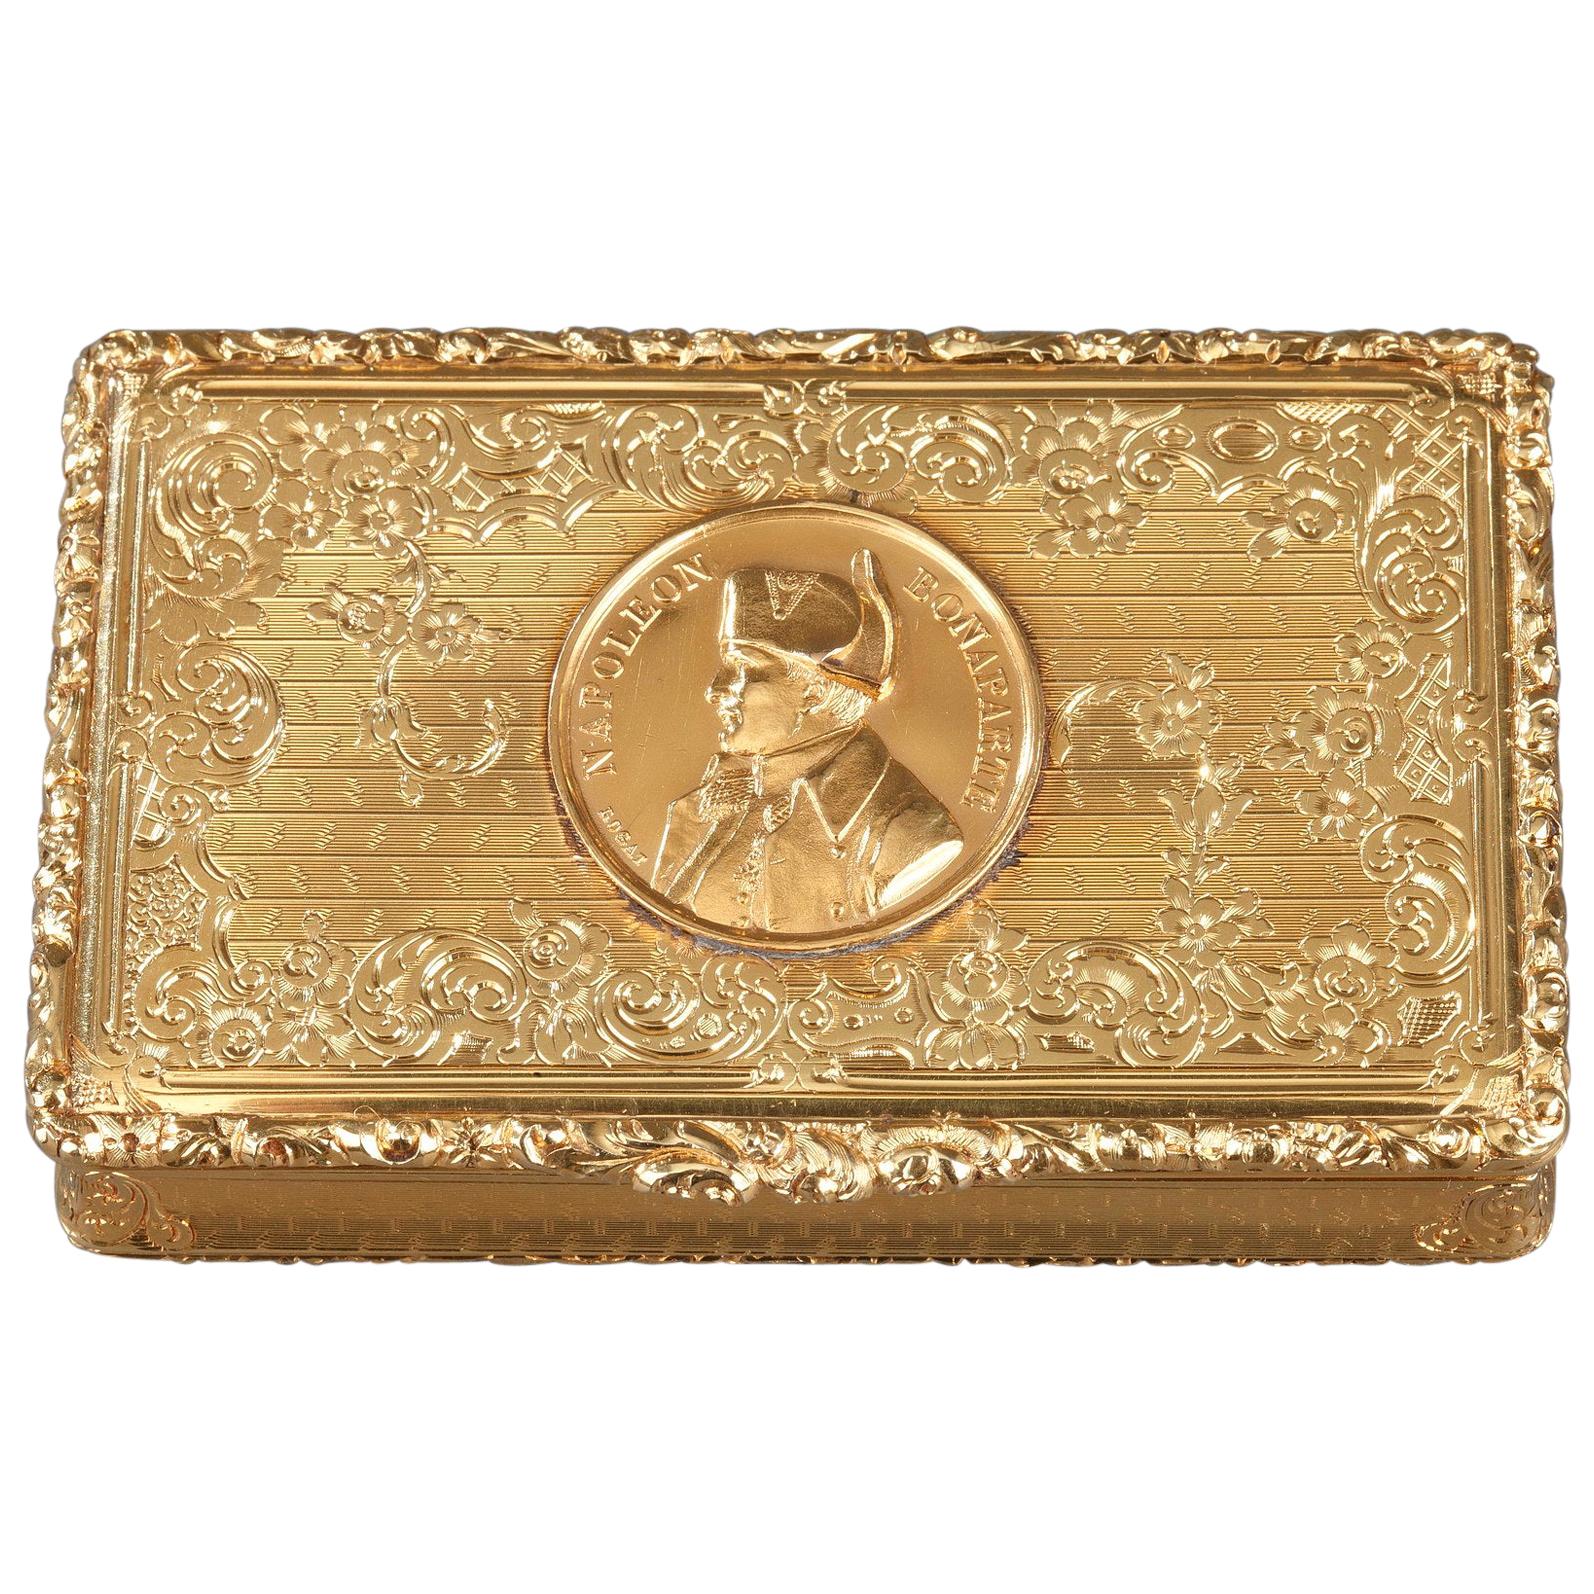 Mid-19th Century Snuff Box with Napoleon Bonaparte Medallion